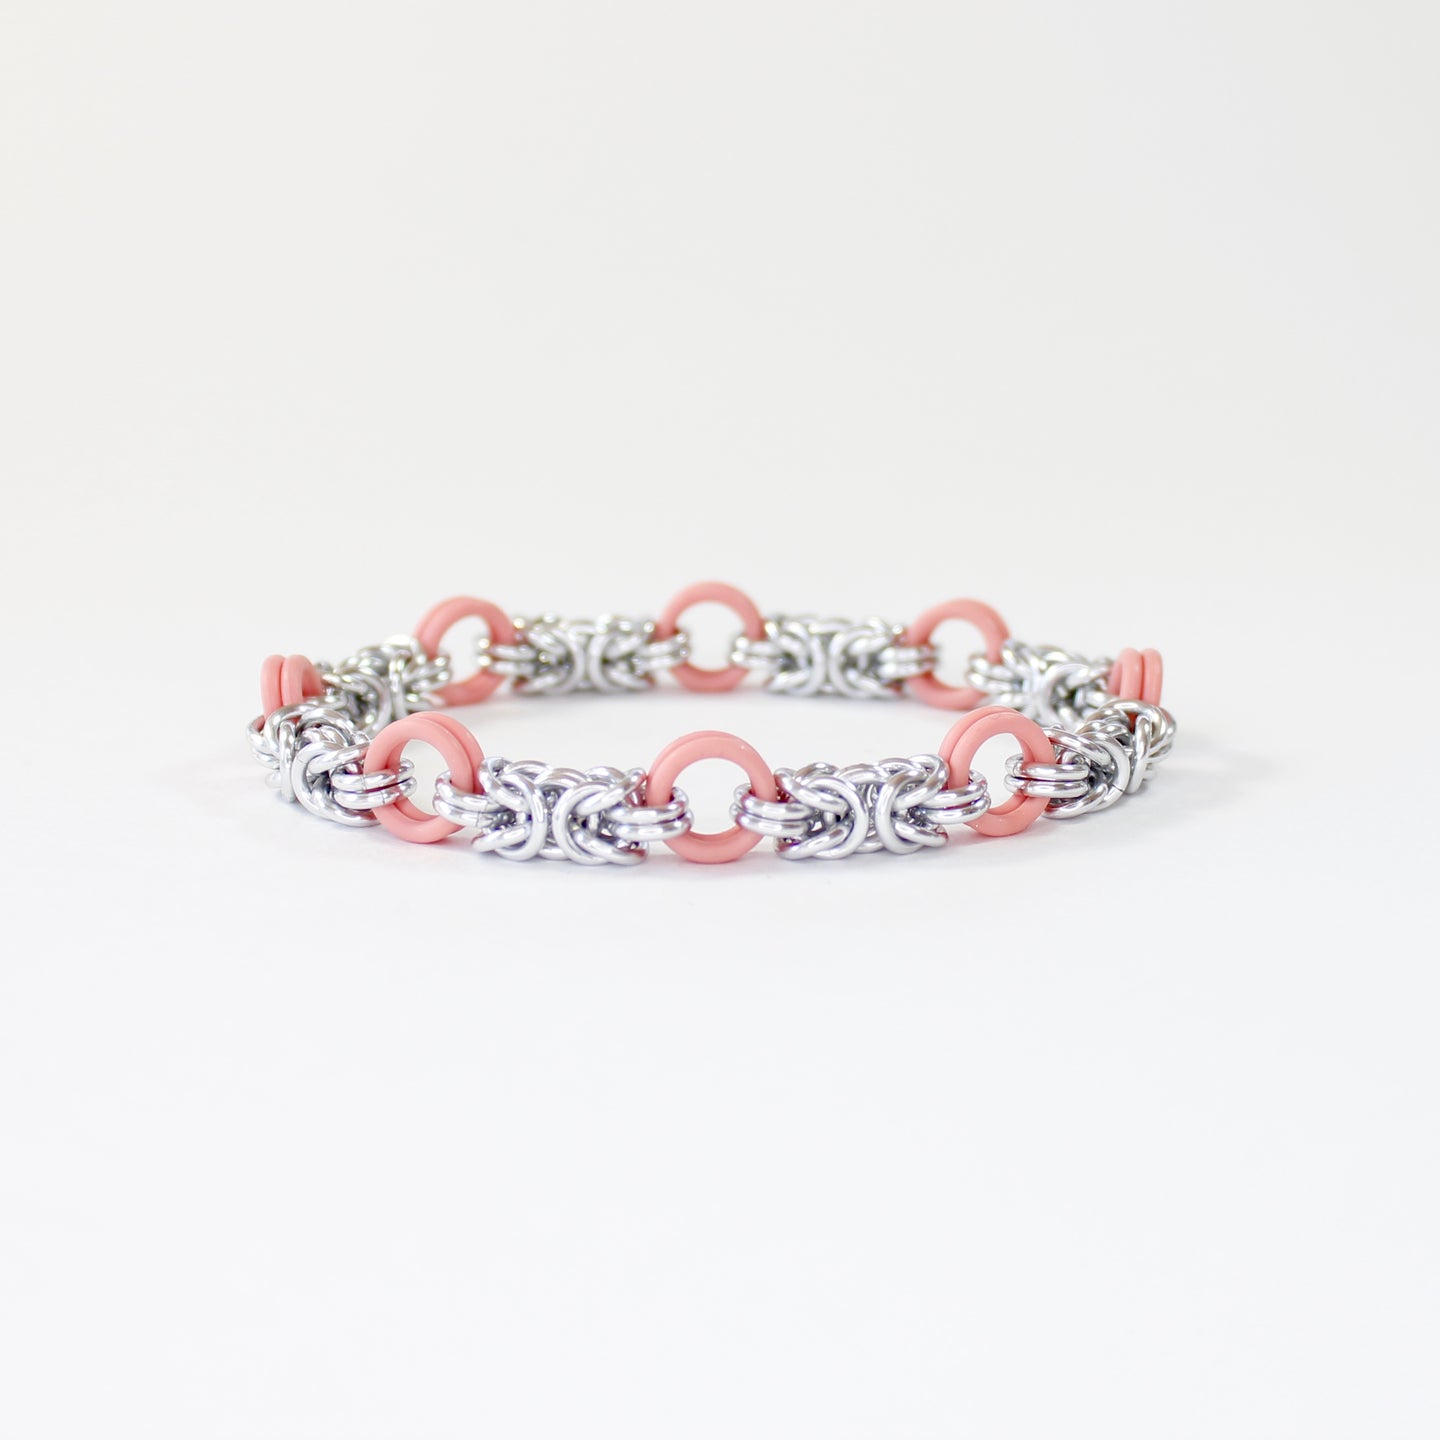 The Byz Stretch Bracelet in Pink + Silver